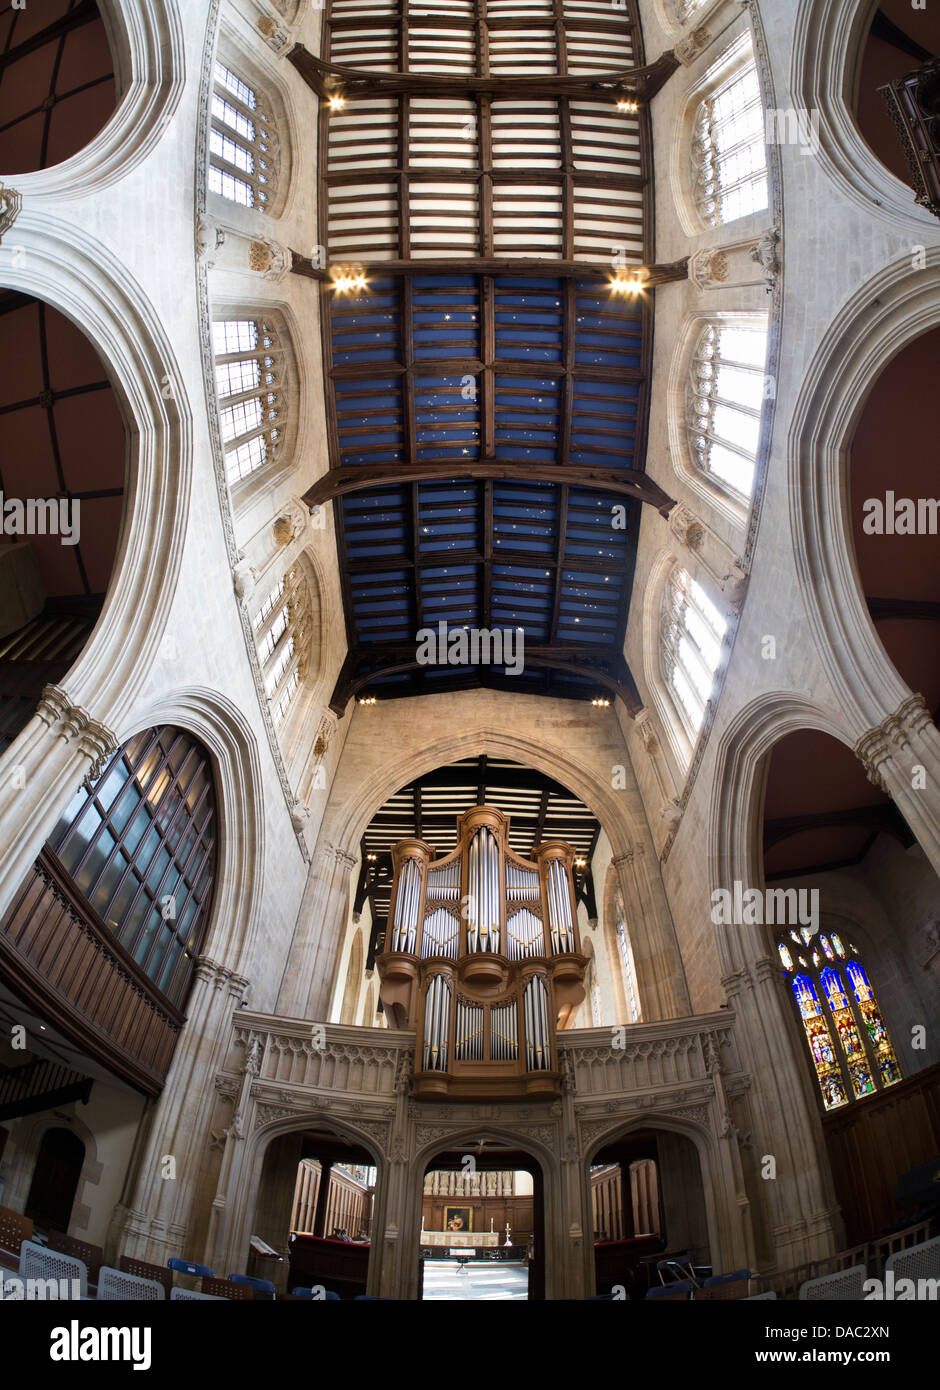 El interior de la iglesia de Saint Mary's, Oxford - fisheye View 4 Foto de stock